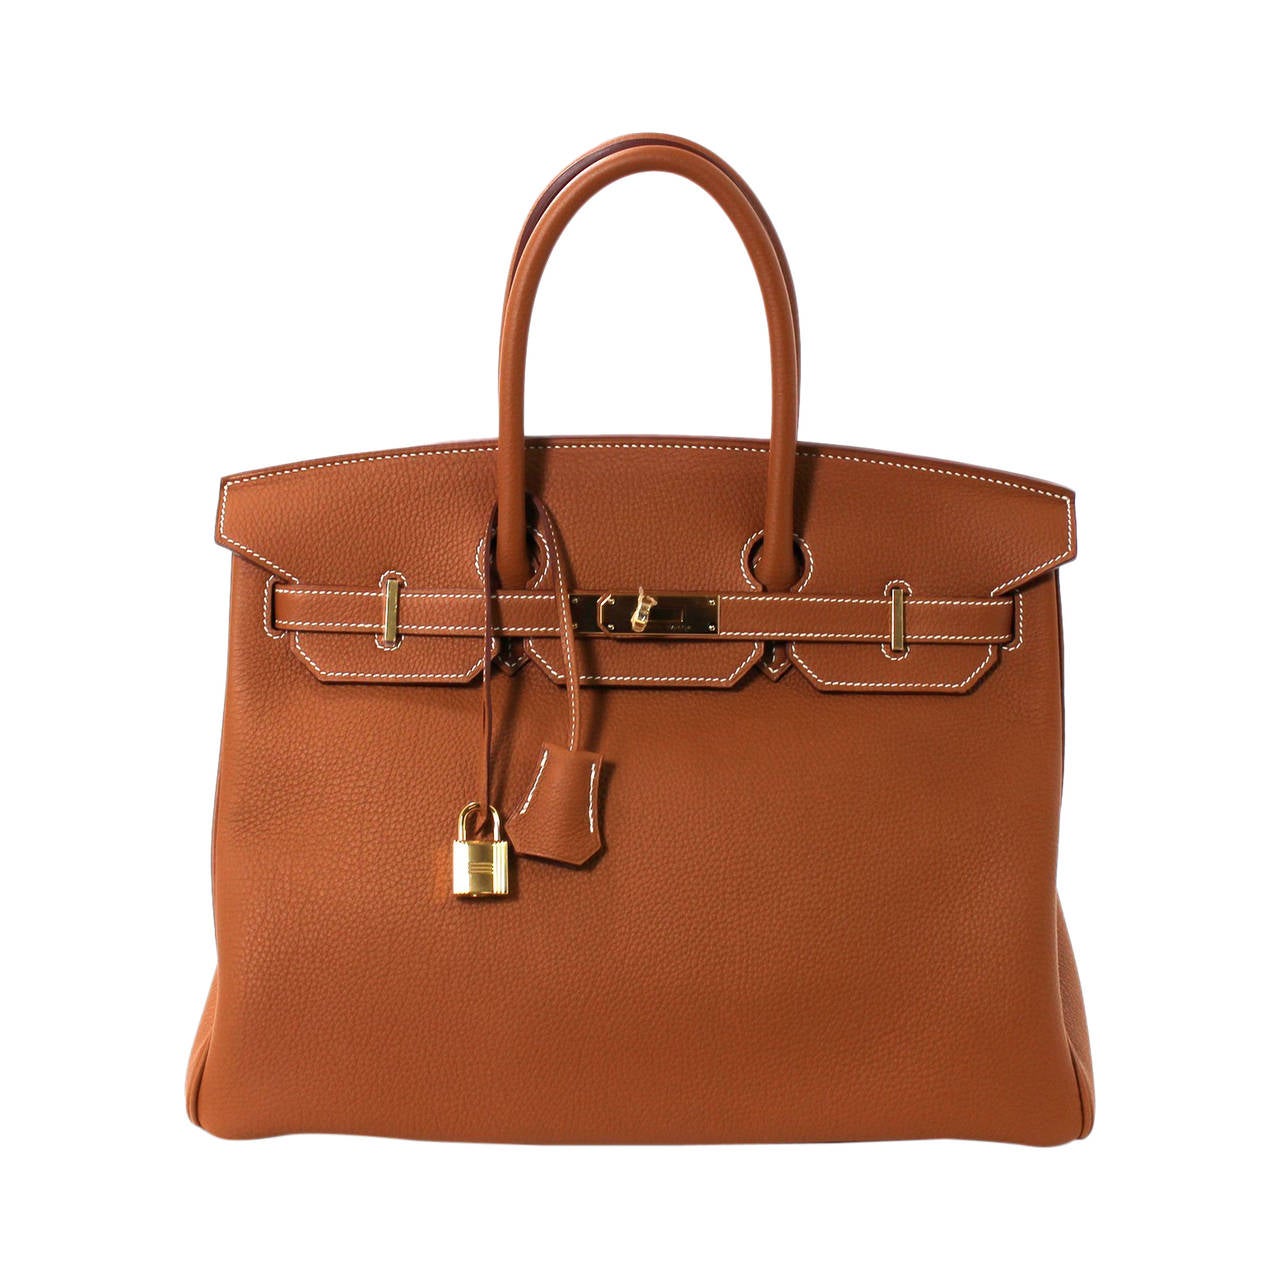 Hermes Classic Gold 35 cm Birkin Bag- Togo with GHW